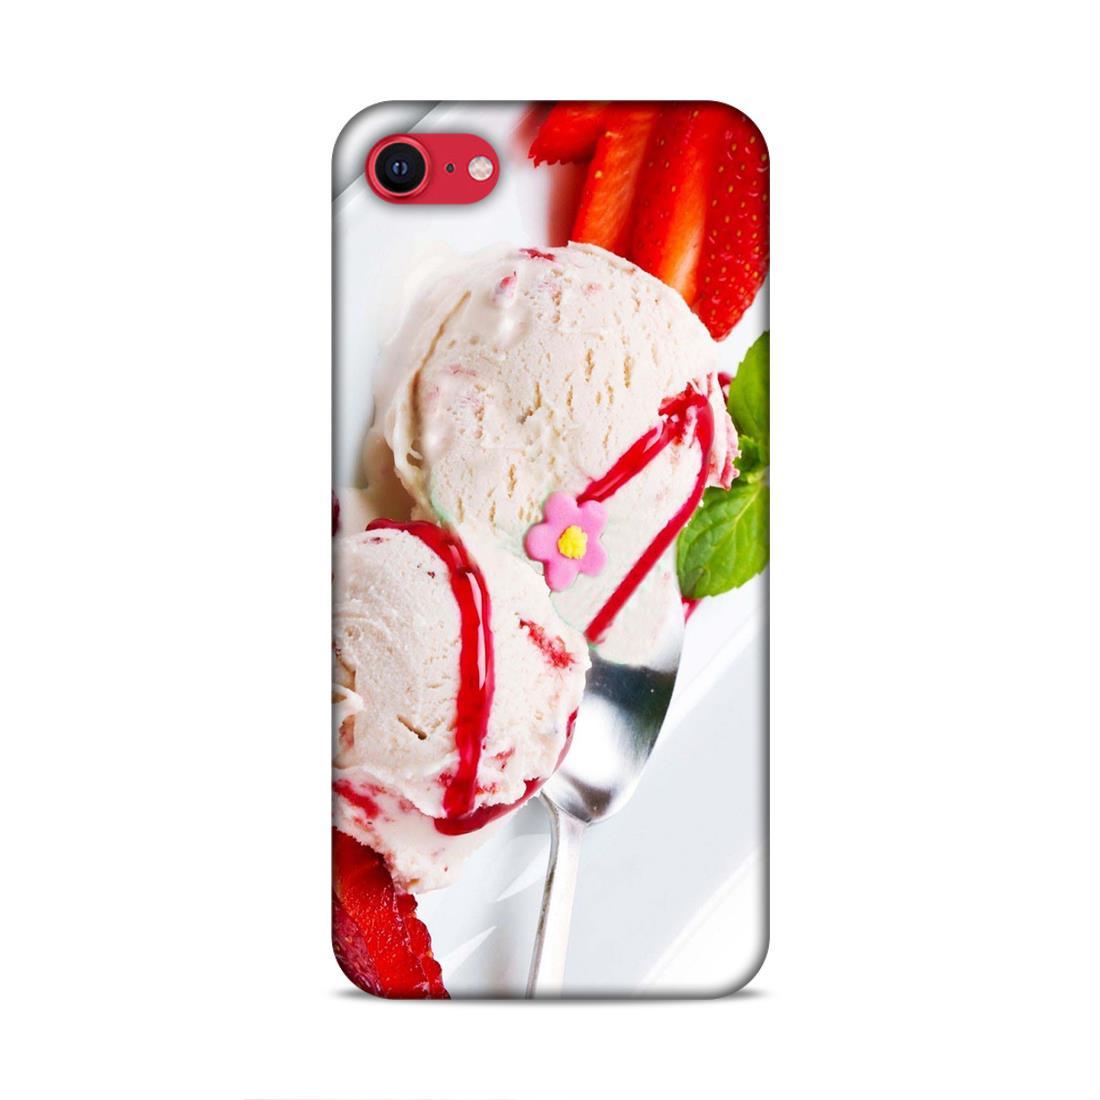 Icecream Love iPhone SE 2020 Mobile Cover